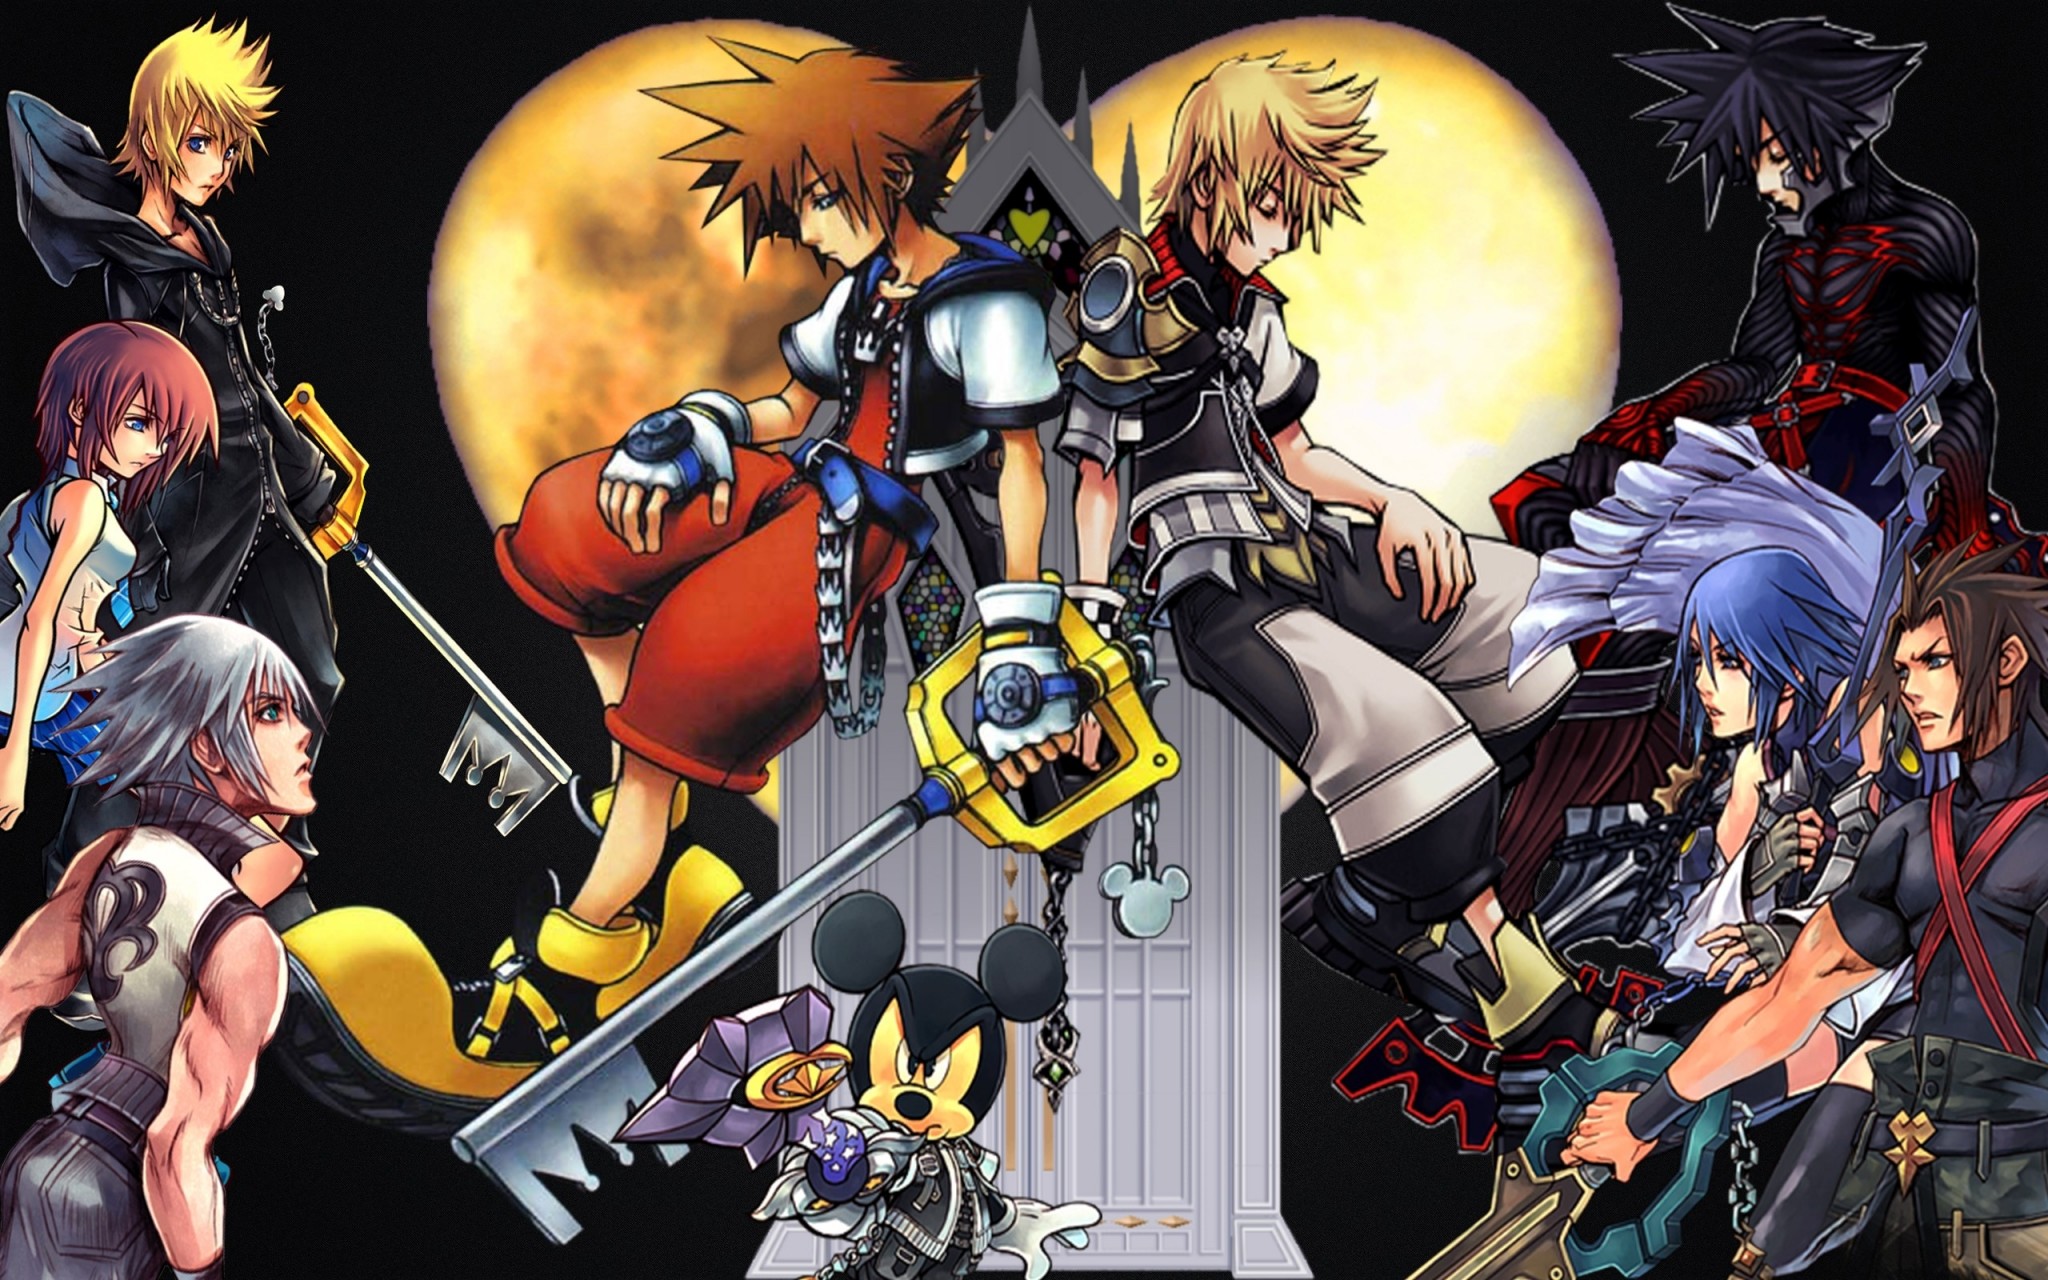 2048x1280 ... 2 | 1280x1024 Wallpaper Images of Kingdom Hearts Characters Wallpaper -  #SC ...